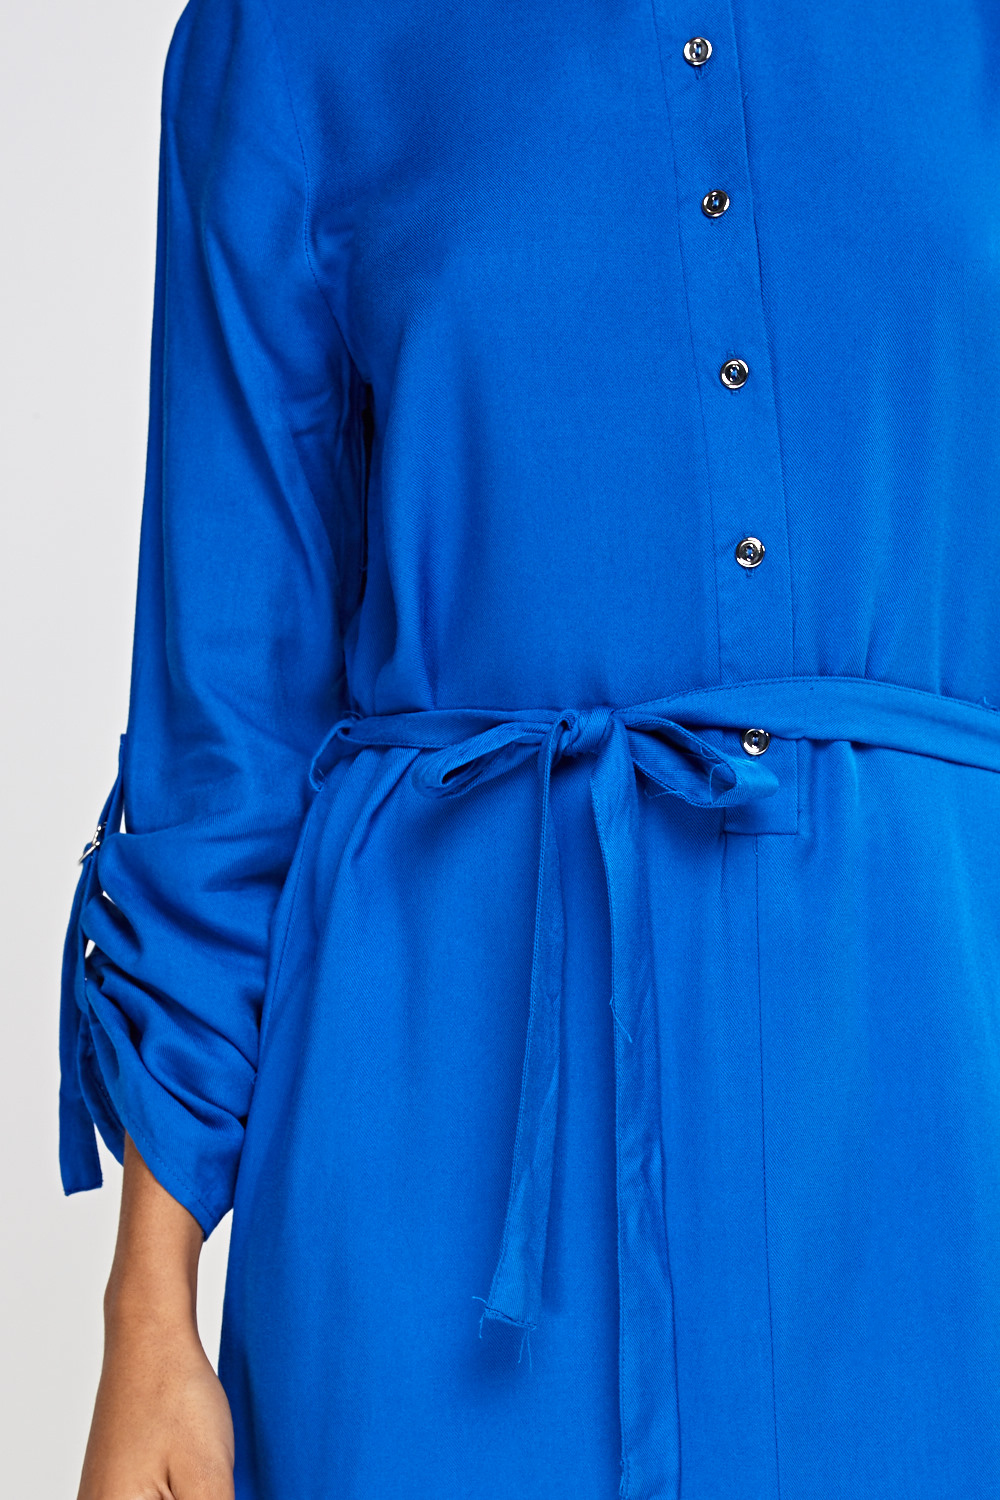 Royal Blue Shirt Dress - Just $7